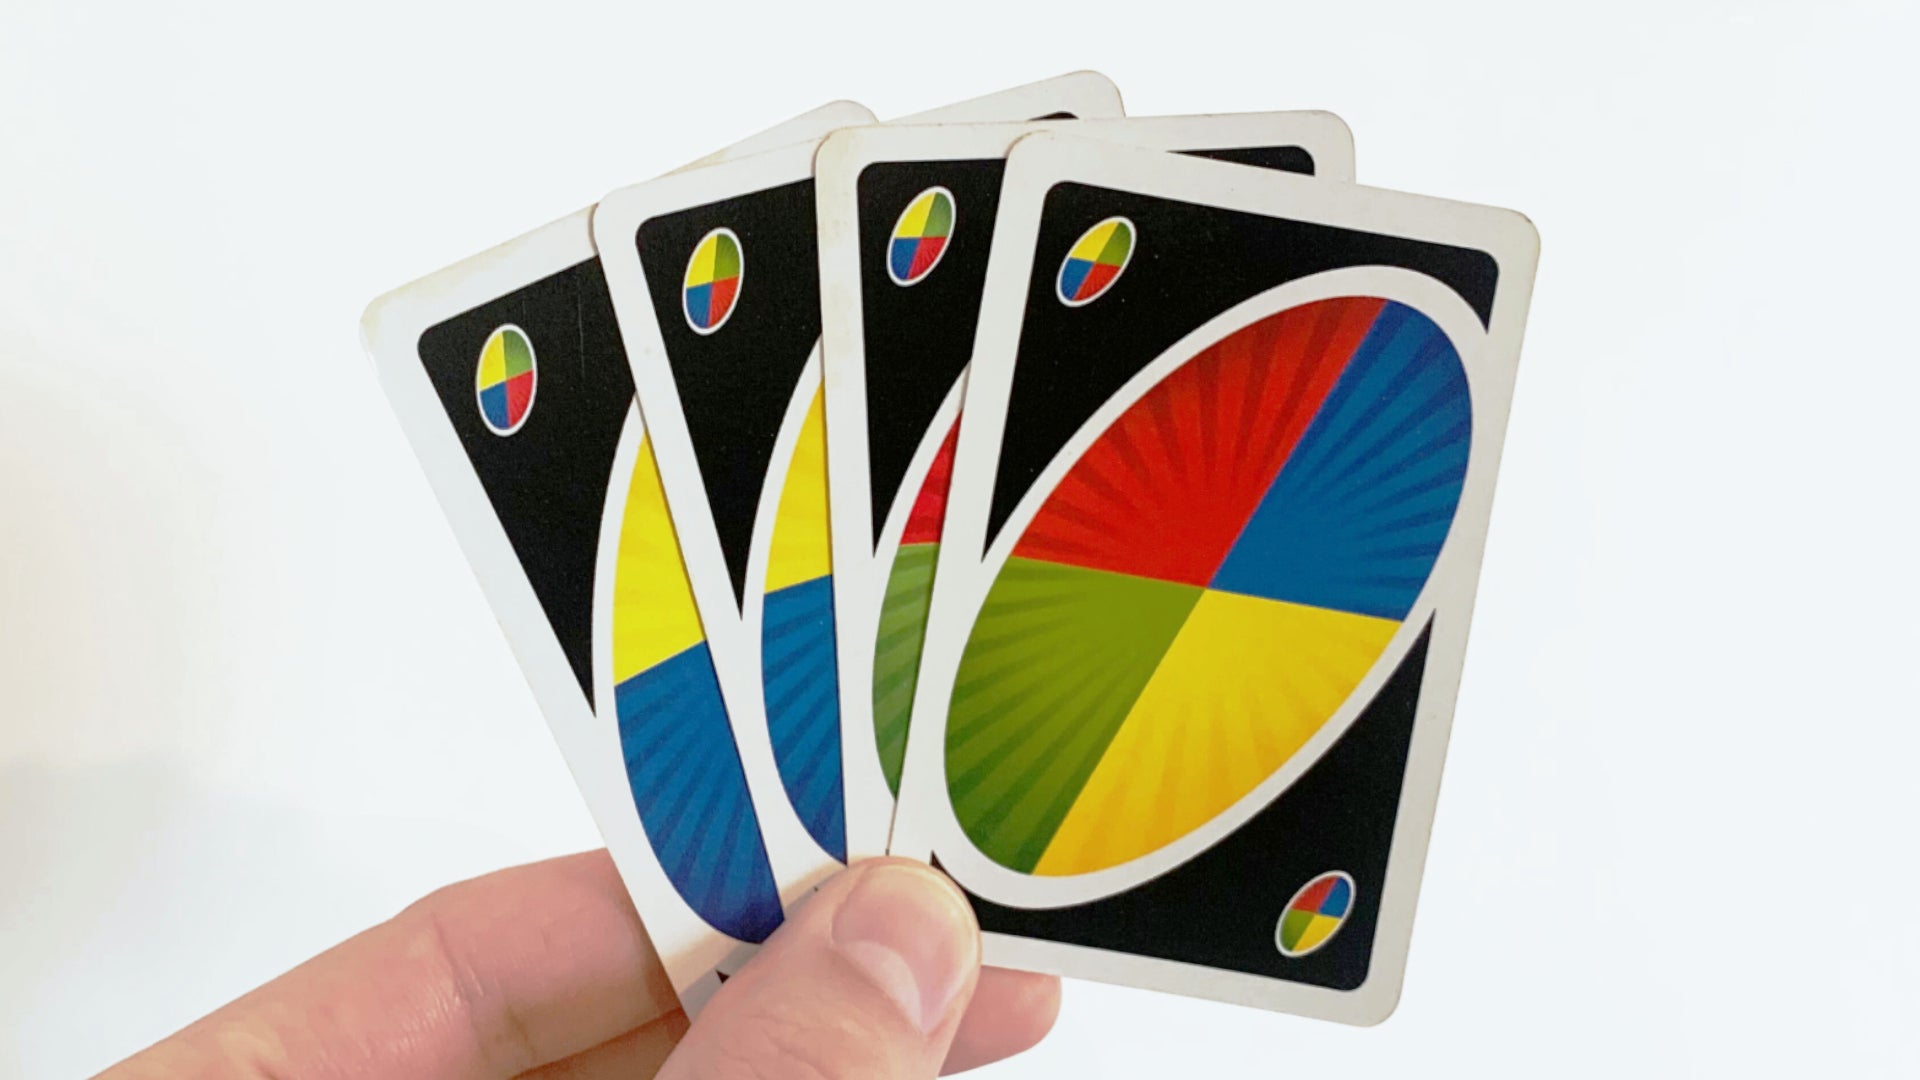 Four UNO Wild cards